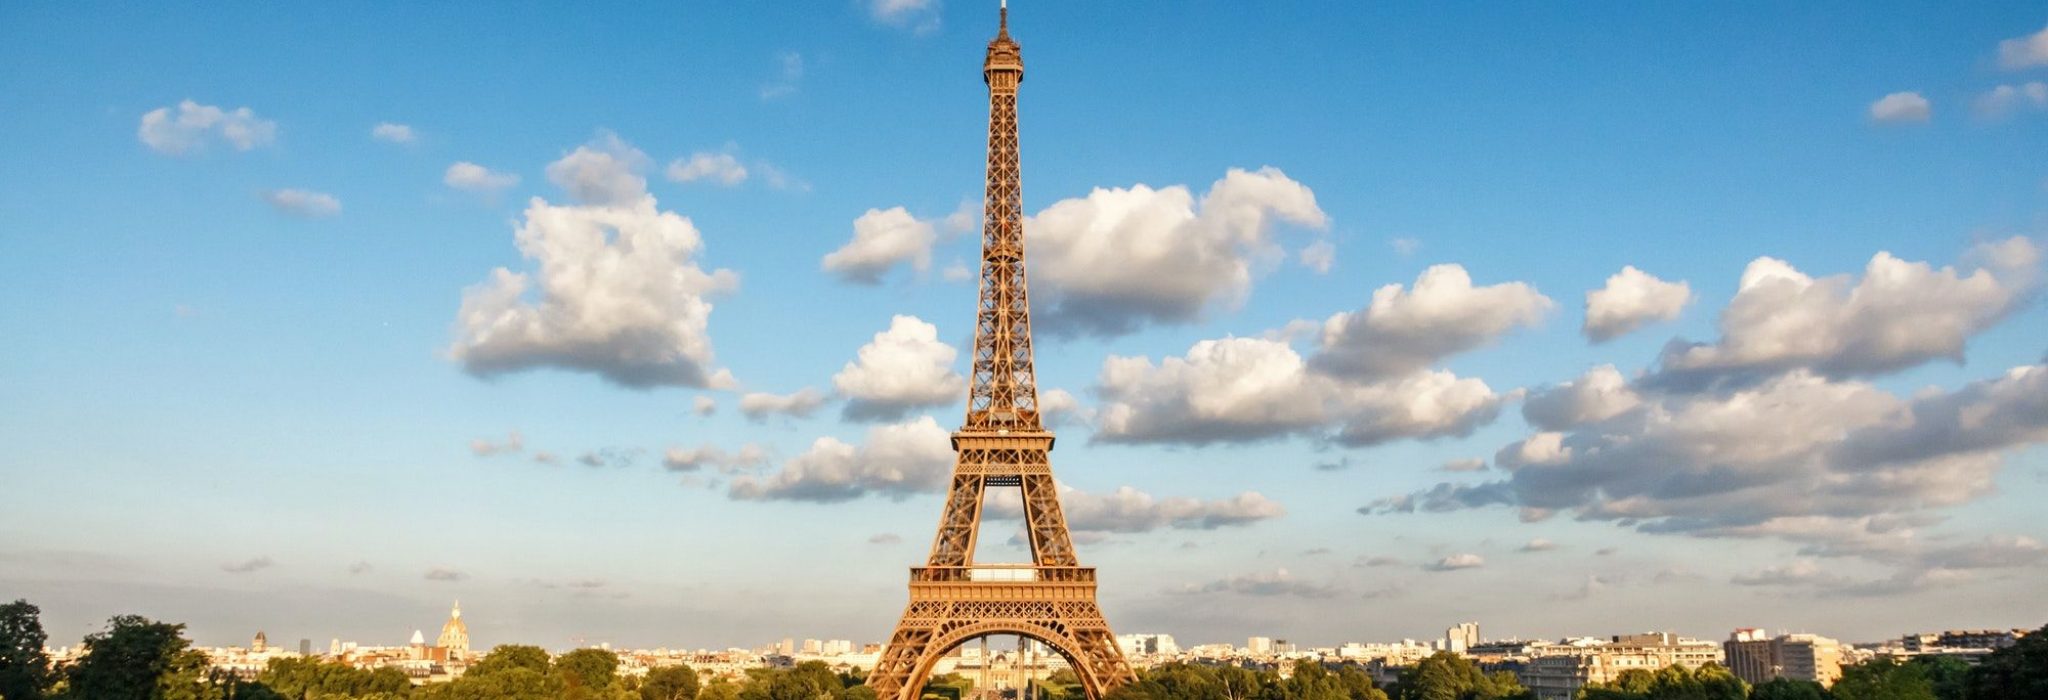 The Eiffel Tower, landmark of Paris, France